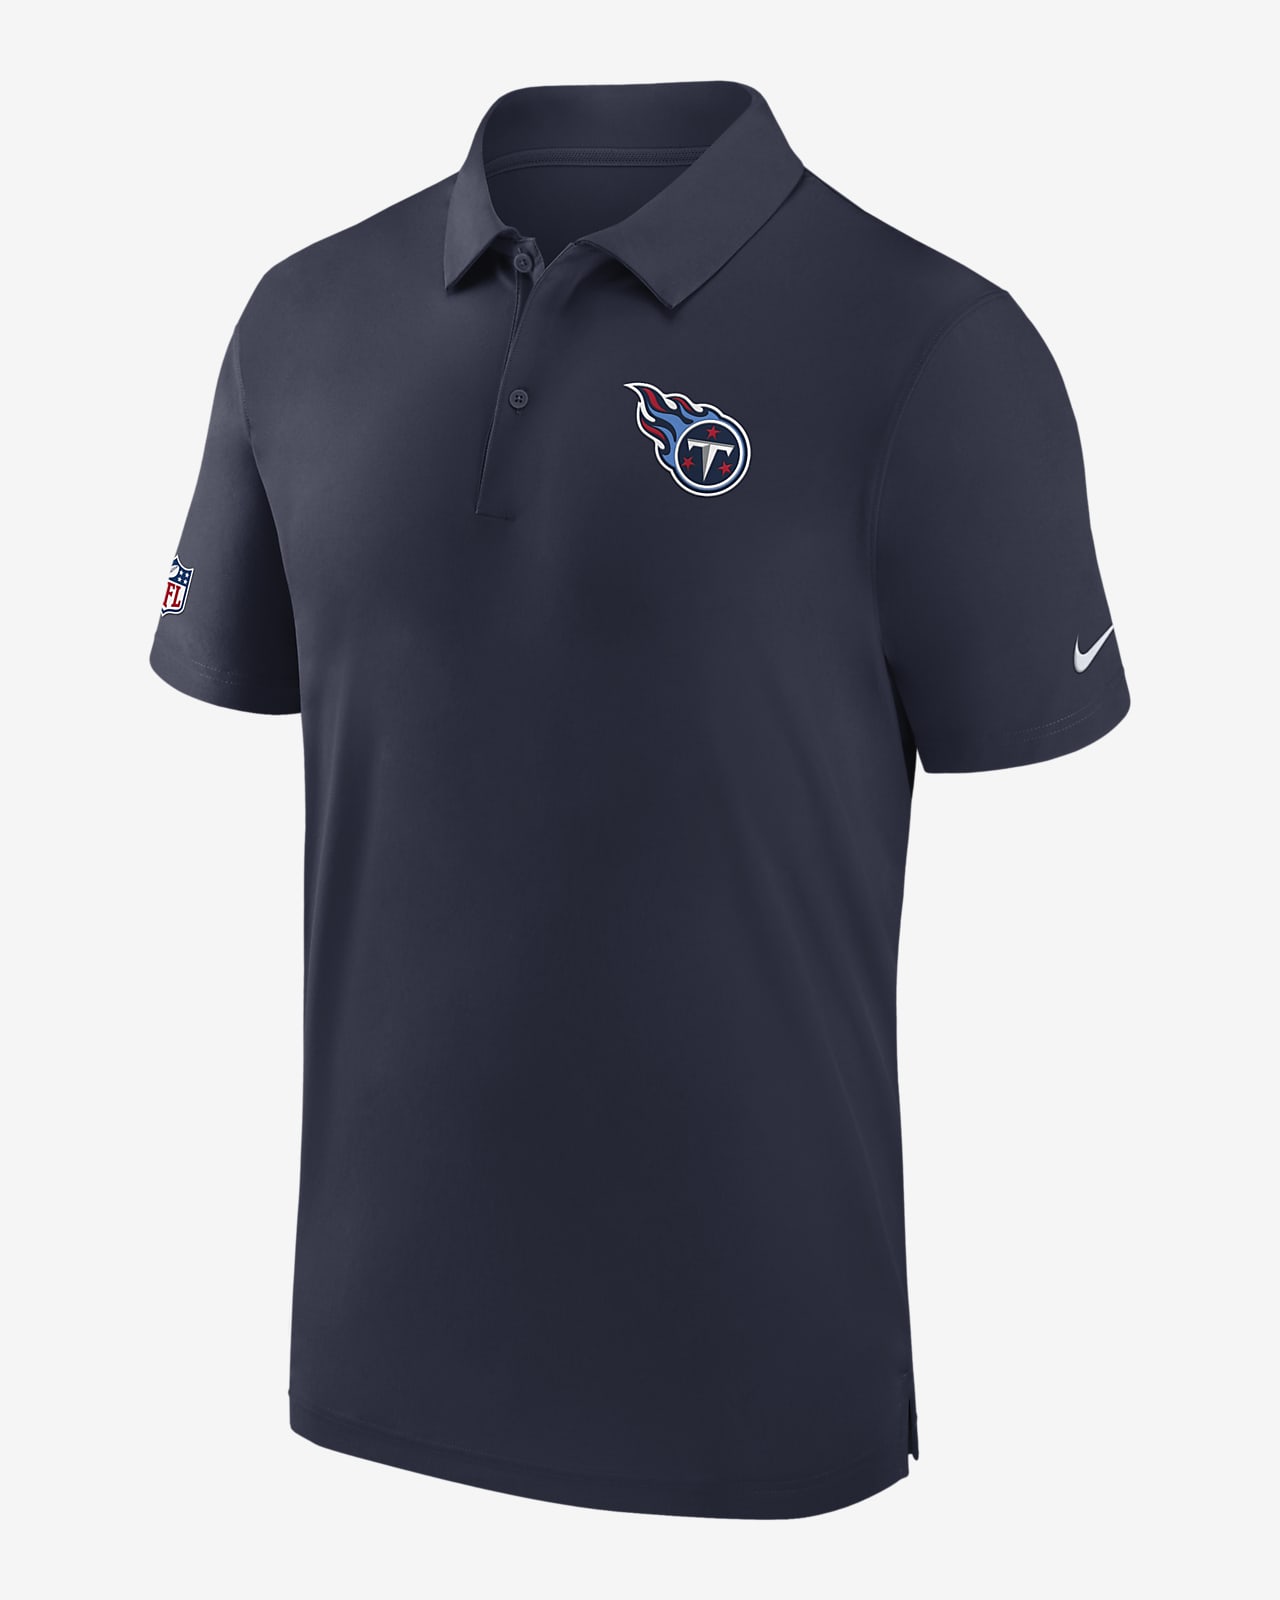 Polo Nike Dri-FIT de la NFL para hombre Tennessee Titans Sideline Coach